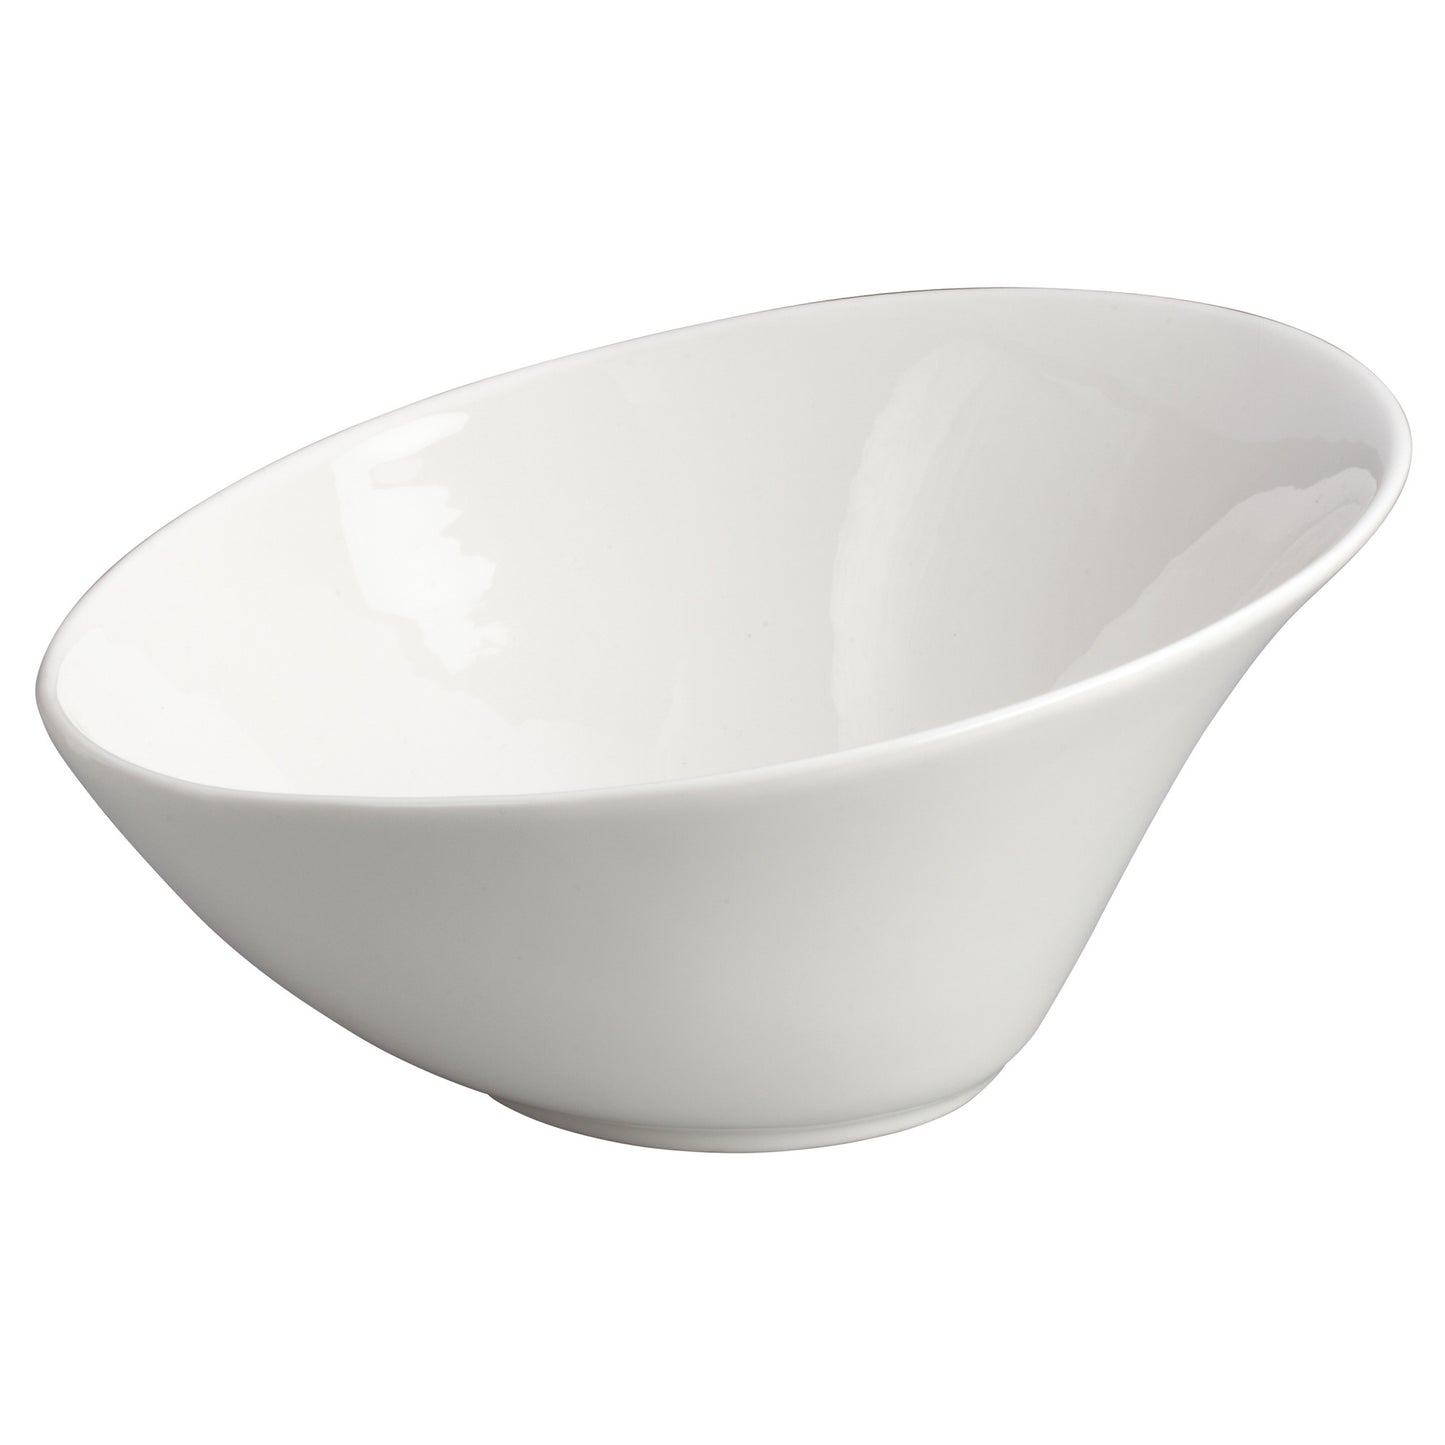 WDP003-202 - 8-1/4"Dia. Porcelain Angled Bowl, Creamy White, 12pcs/case